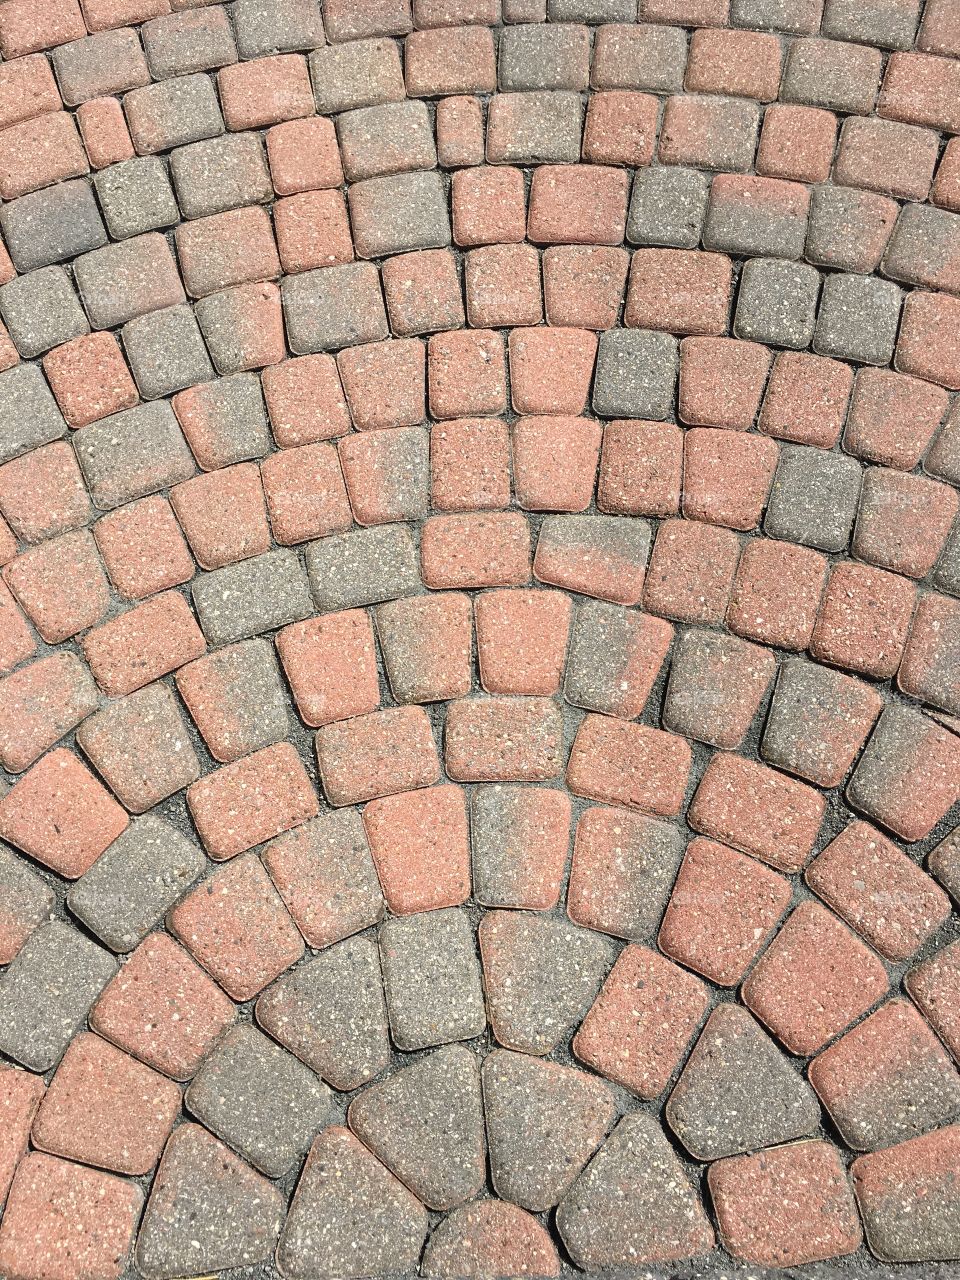 Sunburst brick pattern.